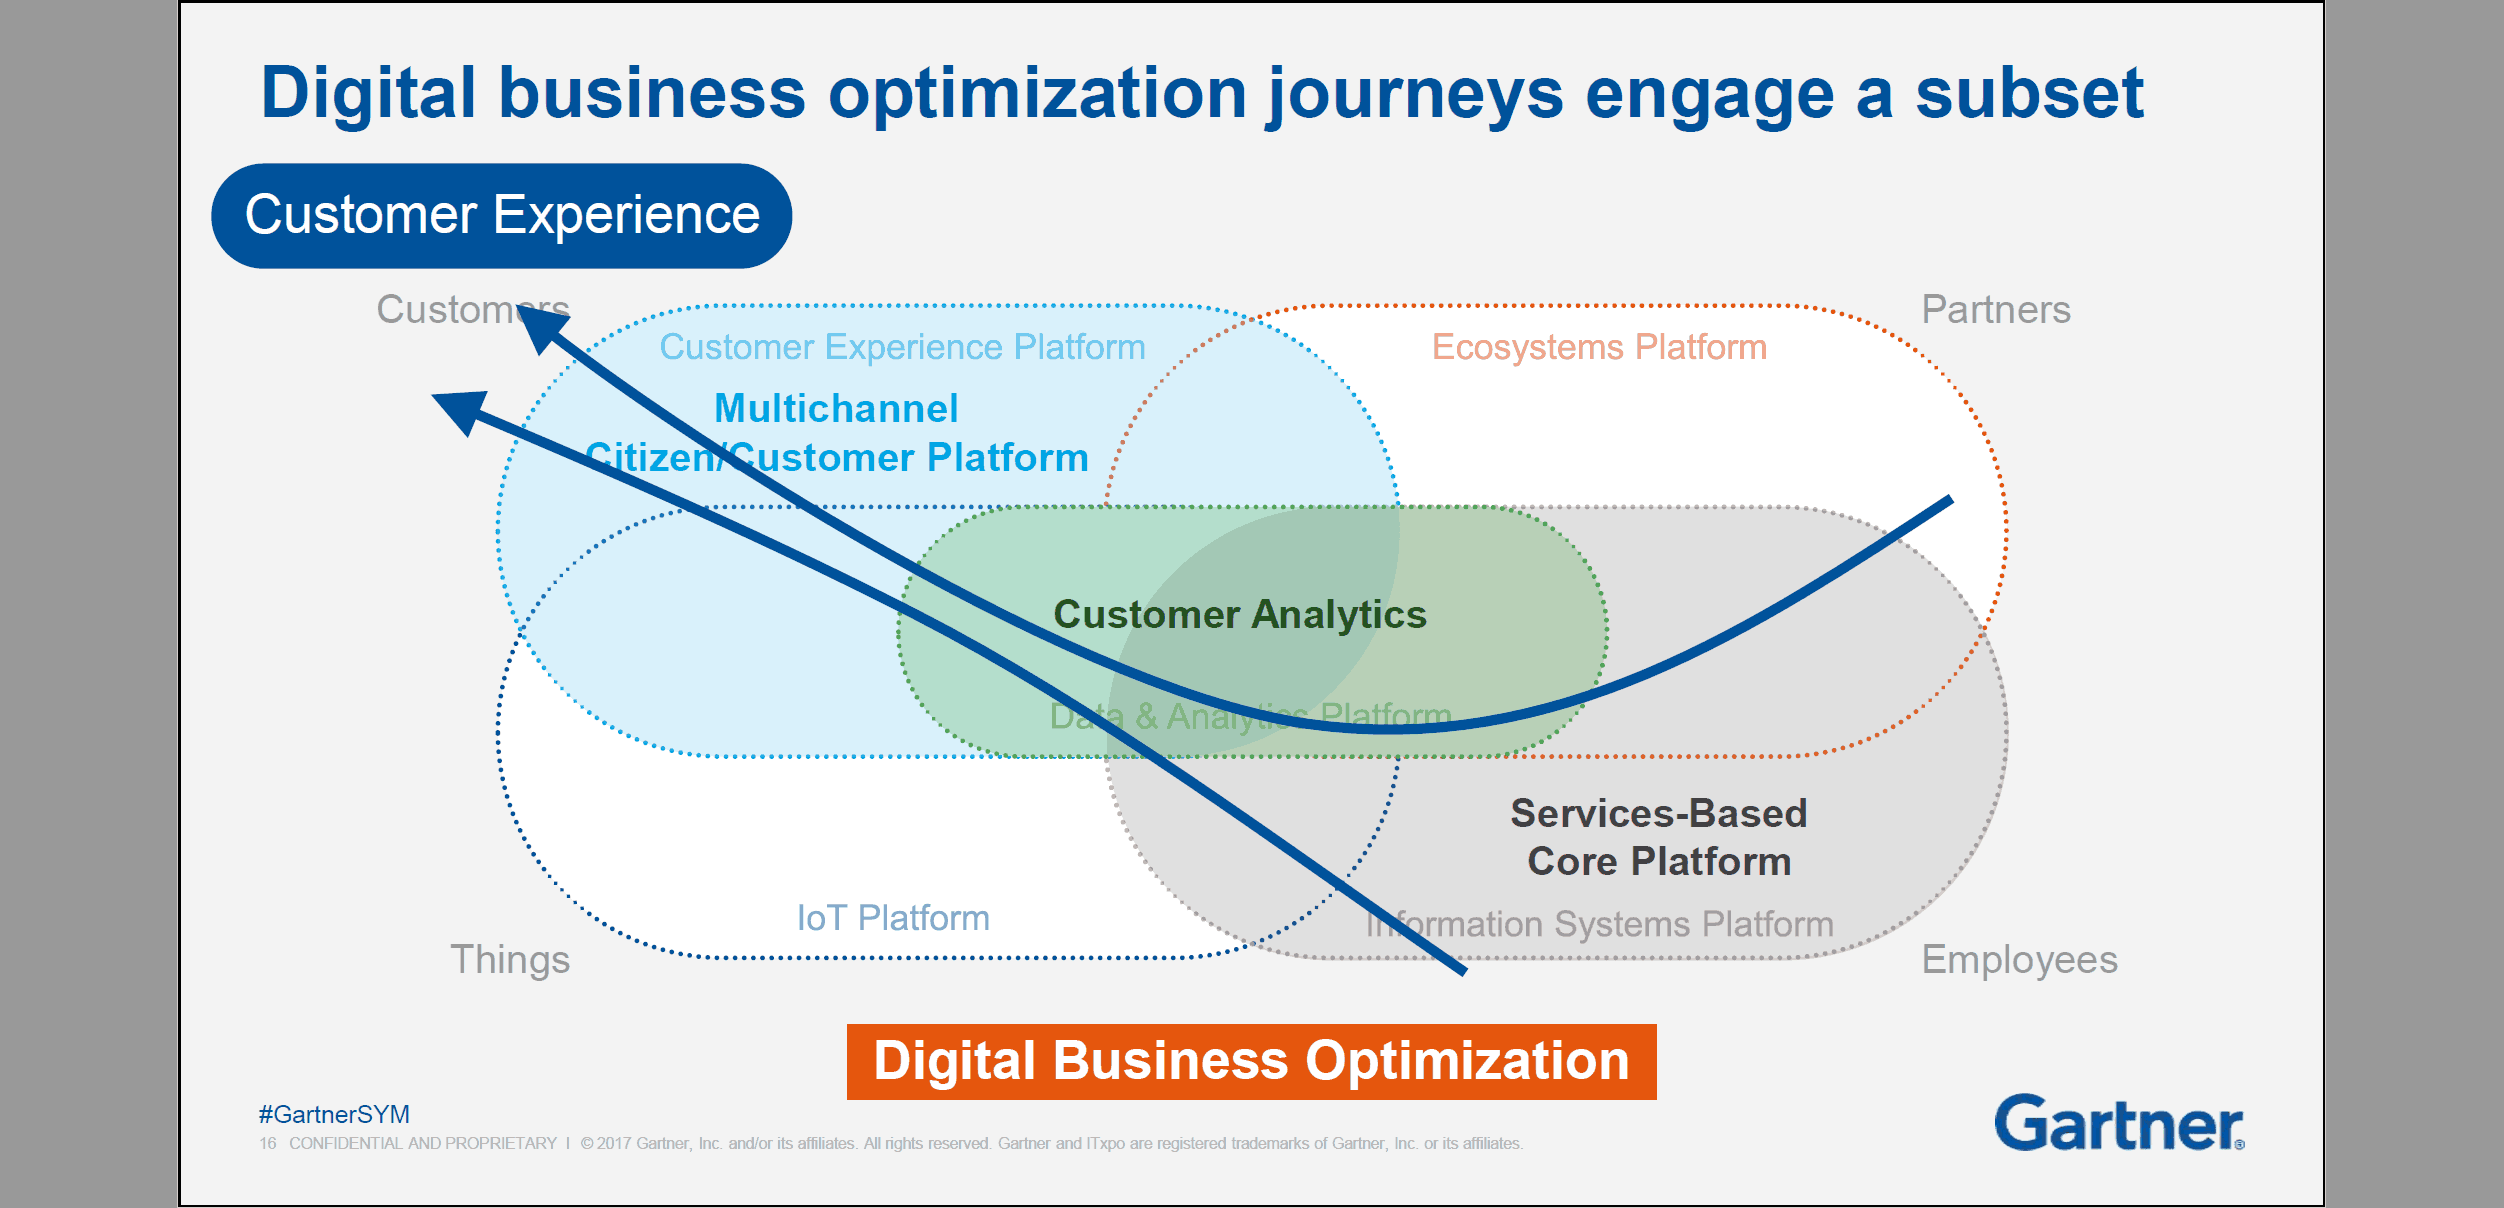 Gartner's Digital Business Optimization Journey Chart